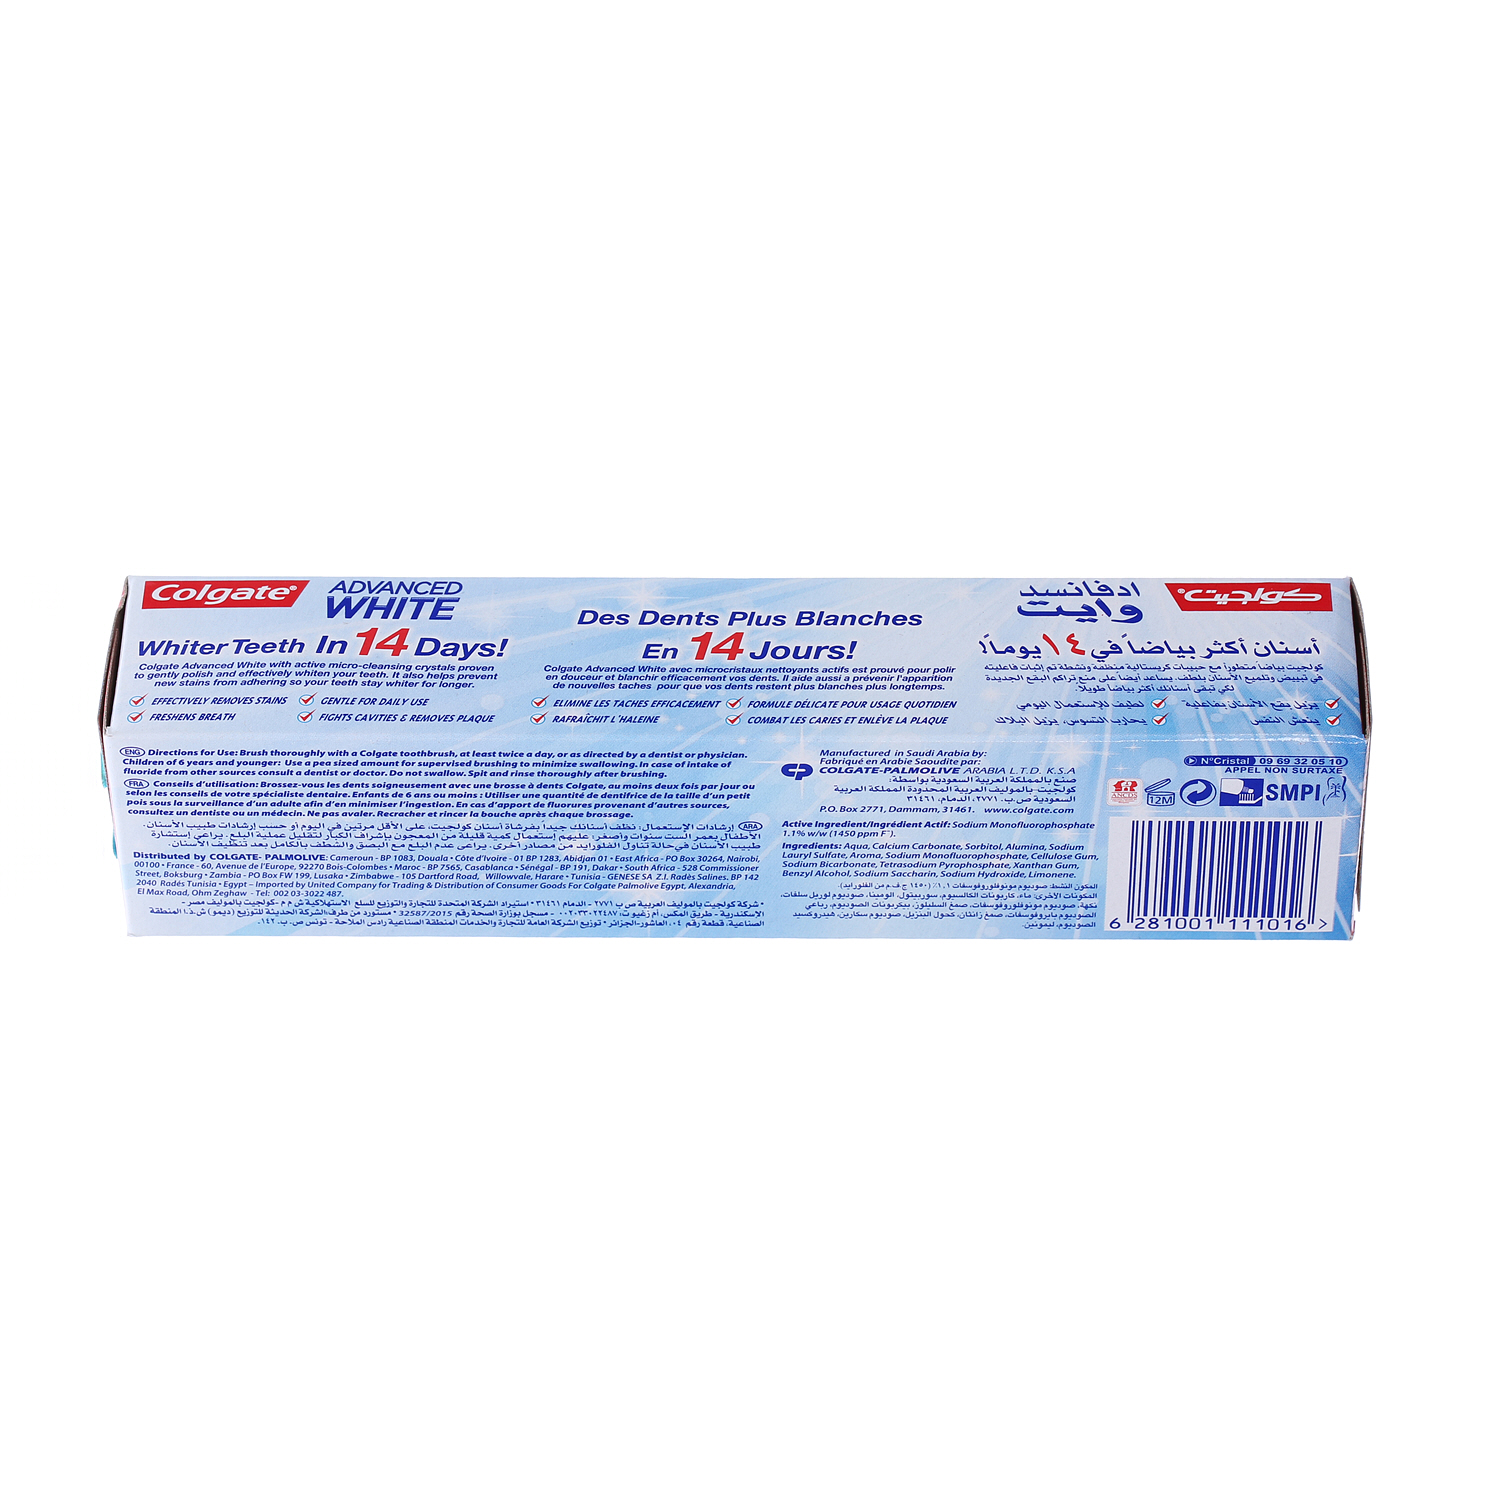 Colgate Toothpaste Advanced Whitening 125 ml